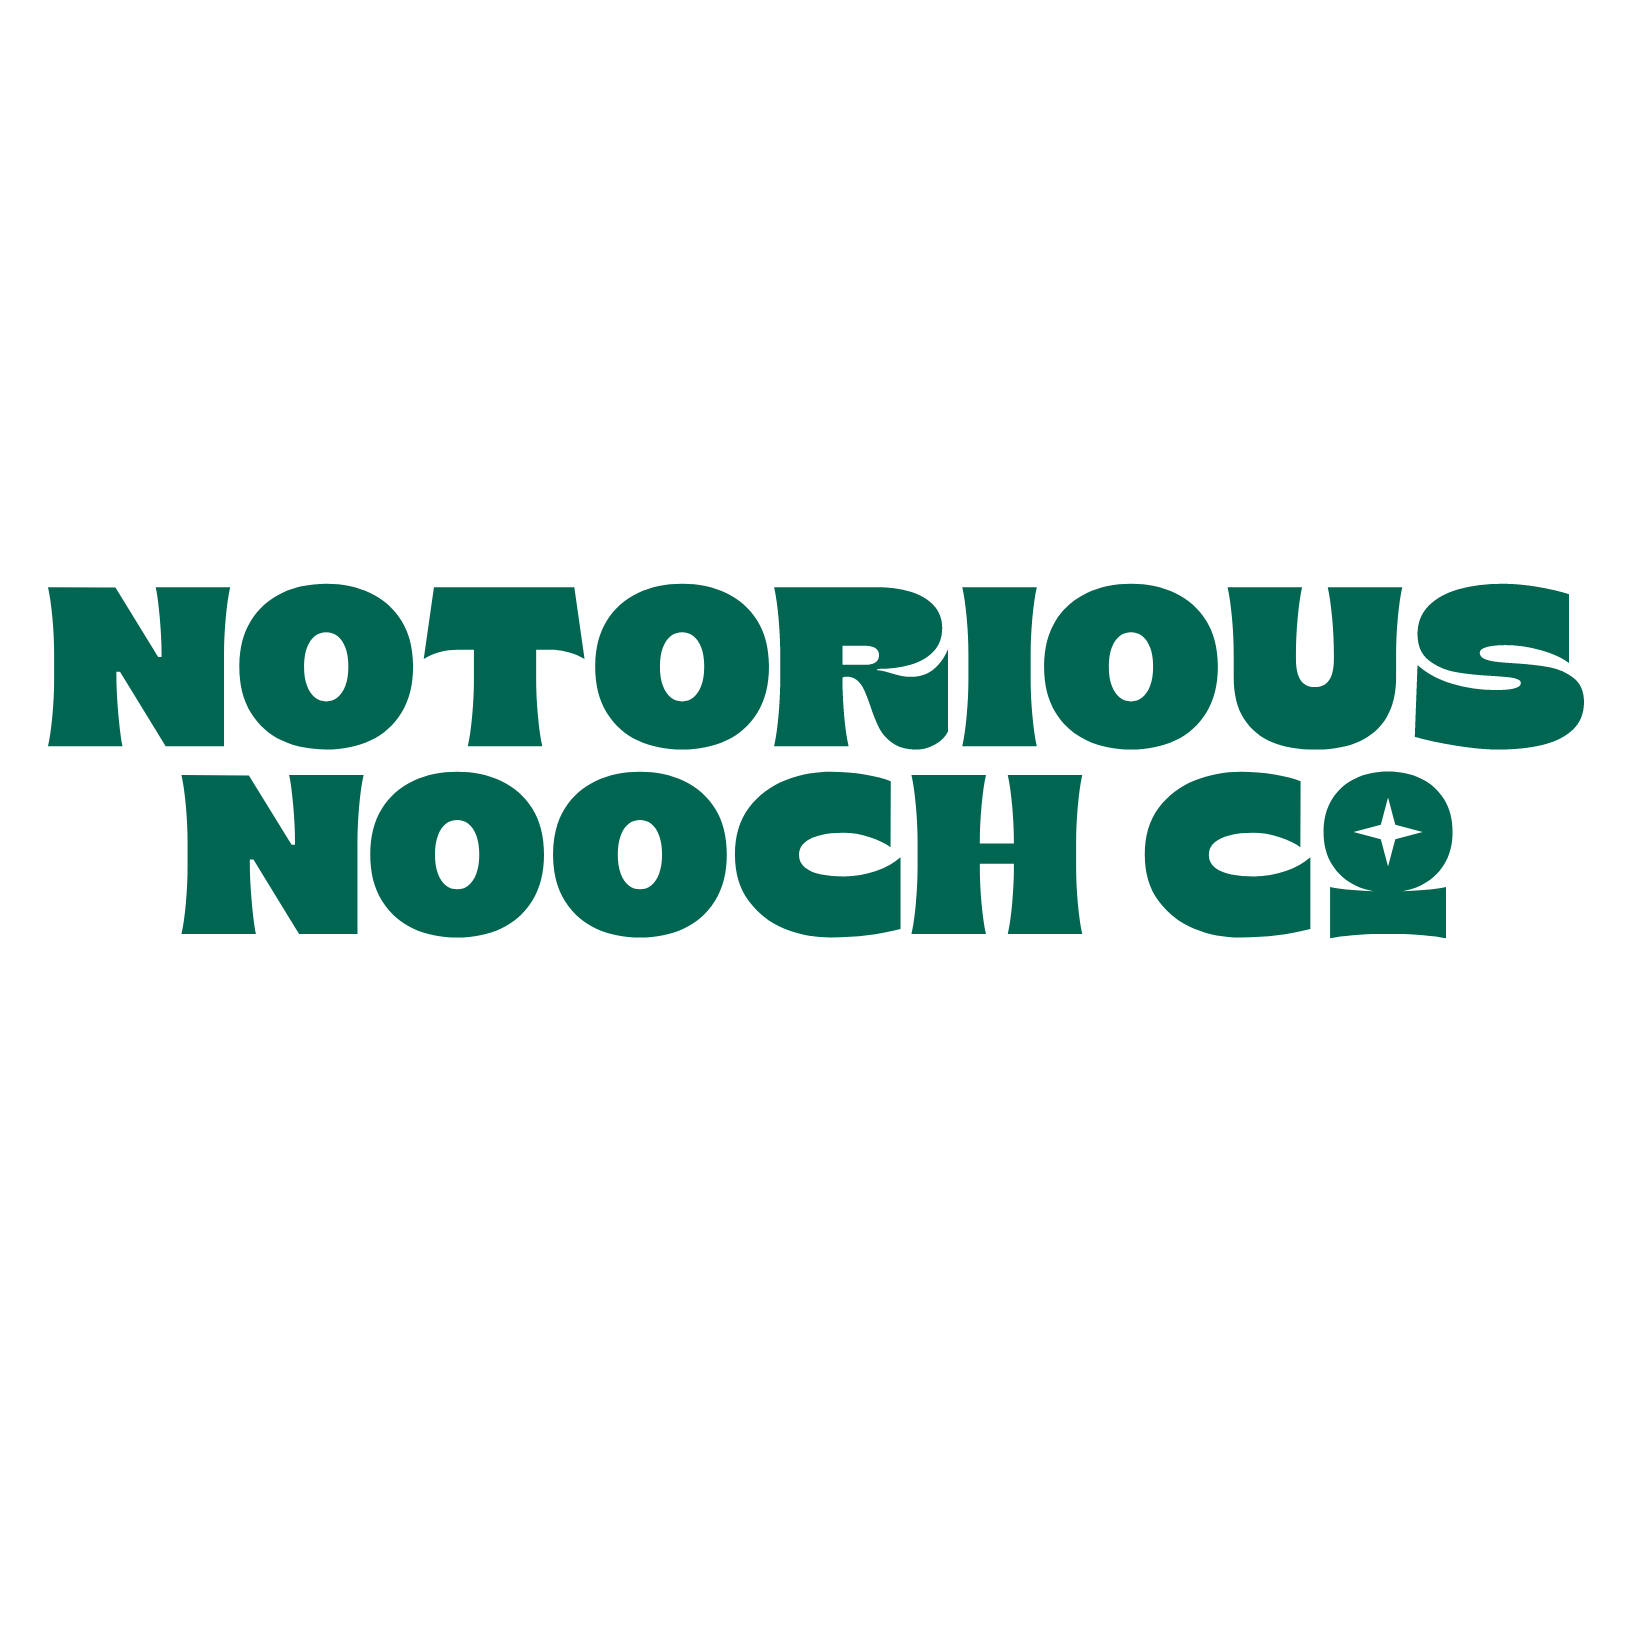 Notorious Nooch Co. brand logo